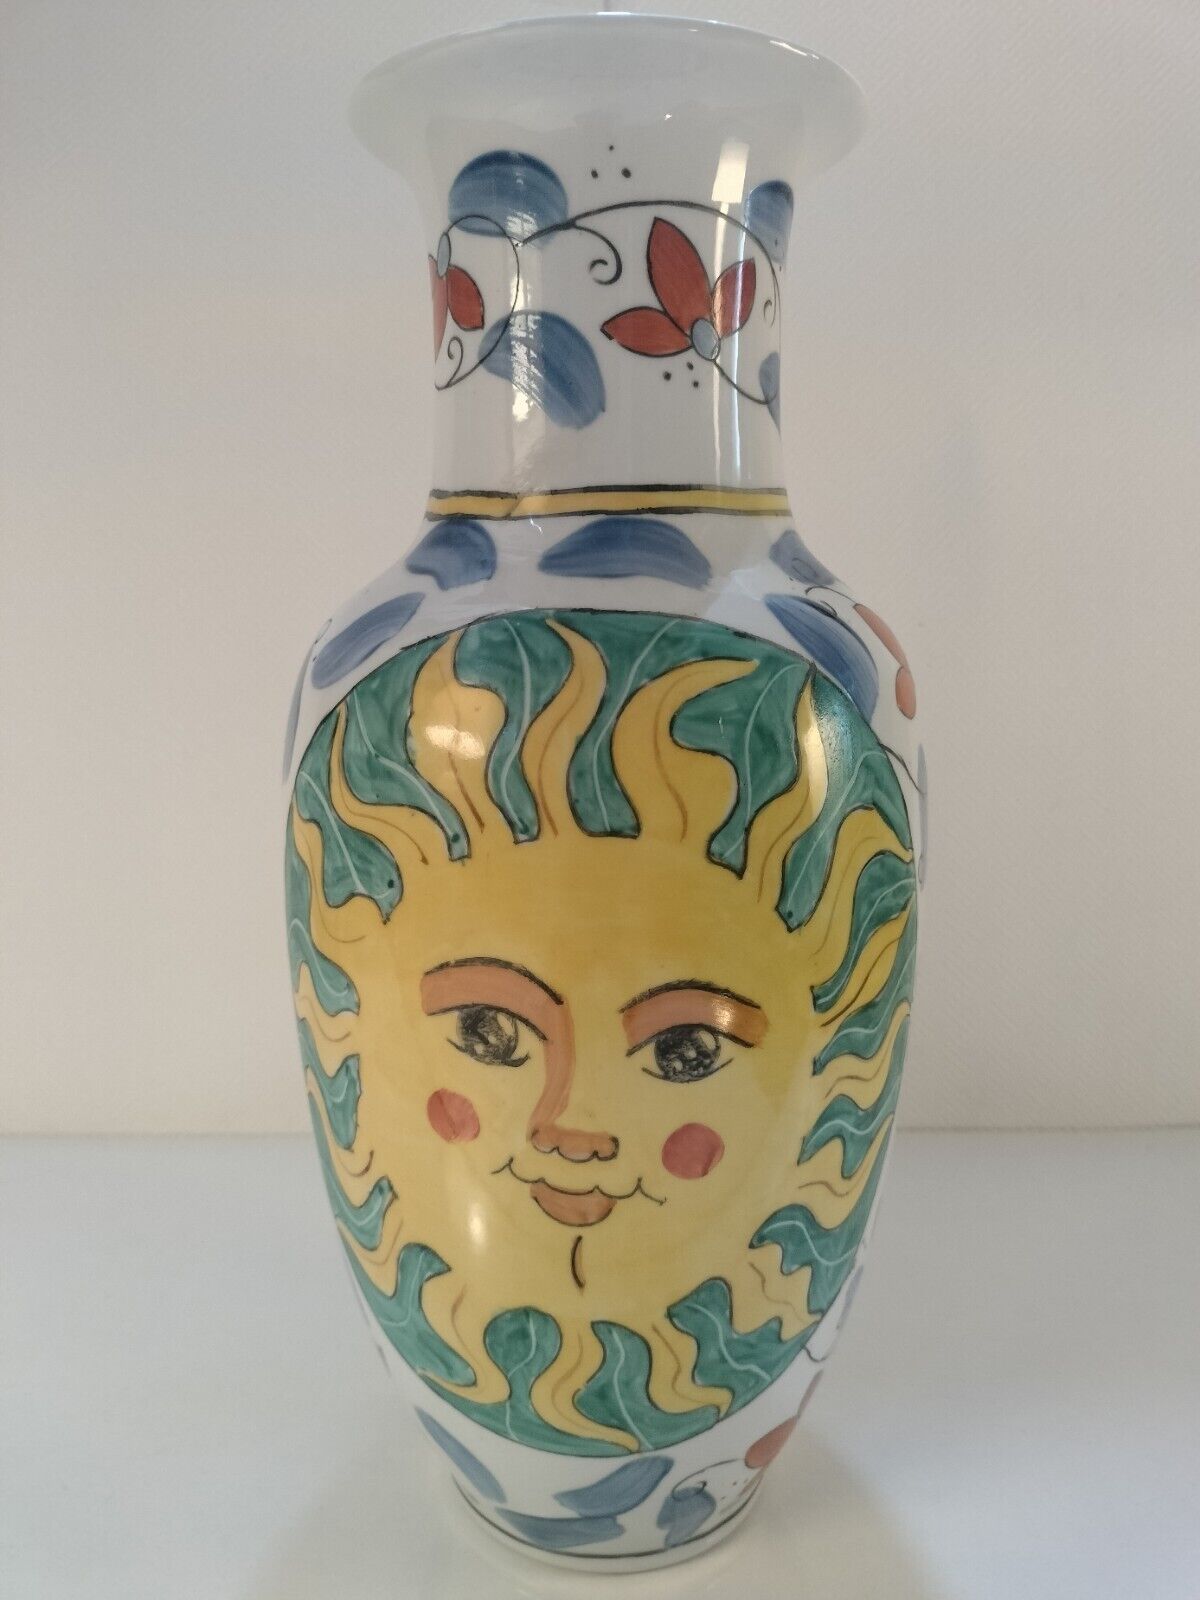 Vintage 1960s Vase Ceramic Pottery Sunburst Hand Painted Blue And Yellow